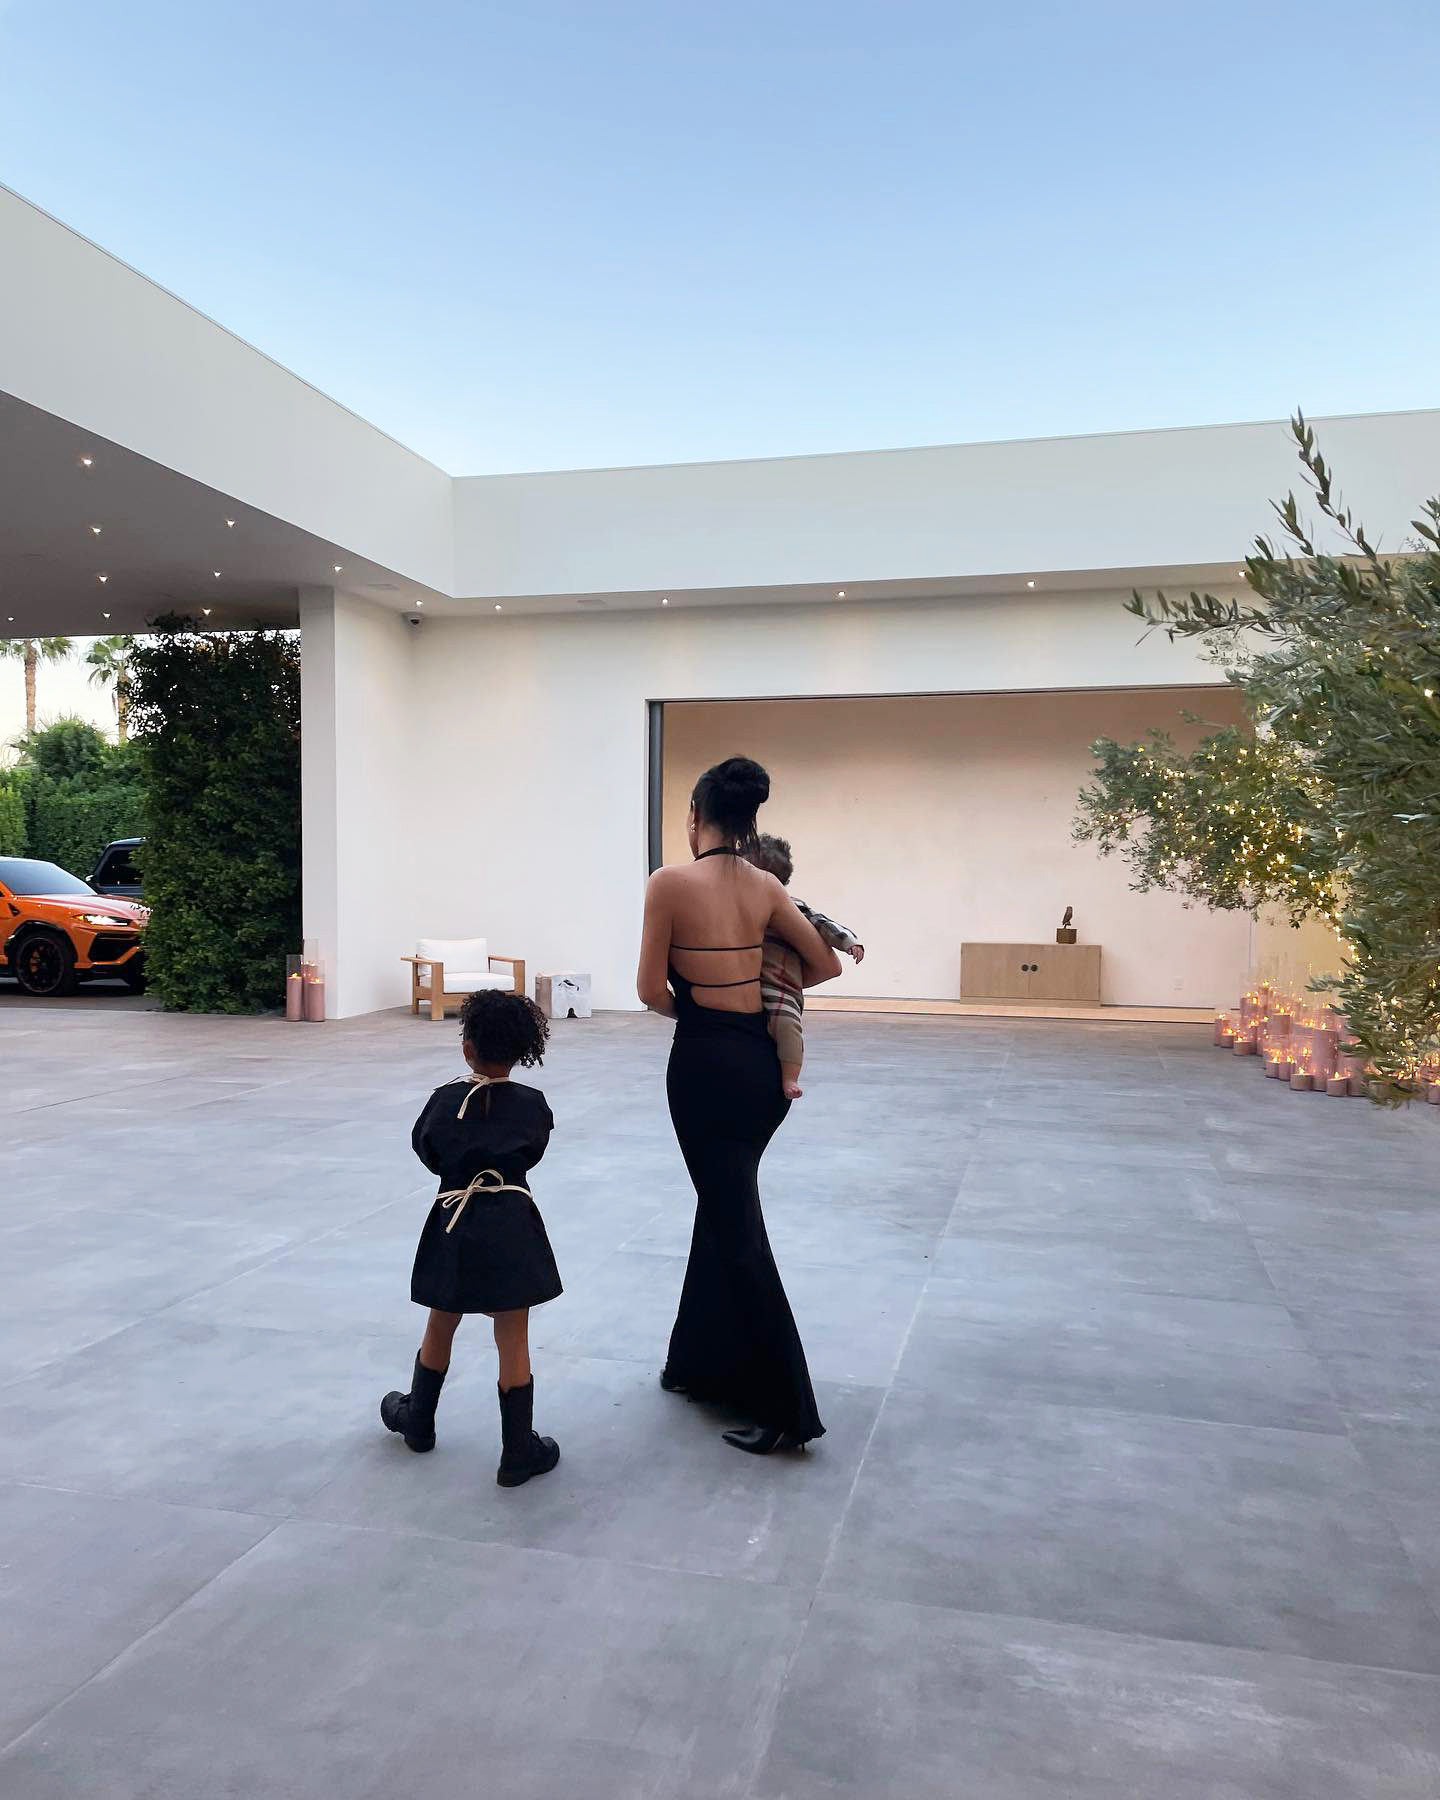 Kylie Jenner Twins With Her Son in Travis Scott x Nike Sneakers – Footwear  News